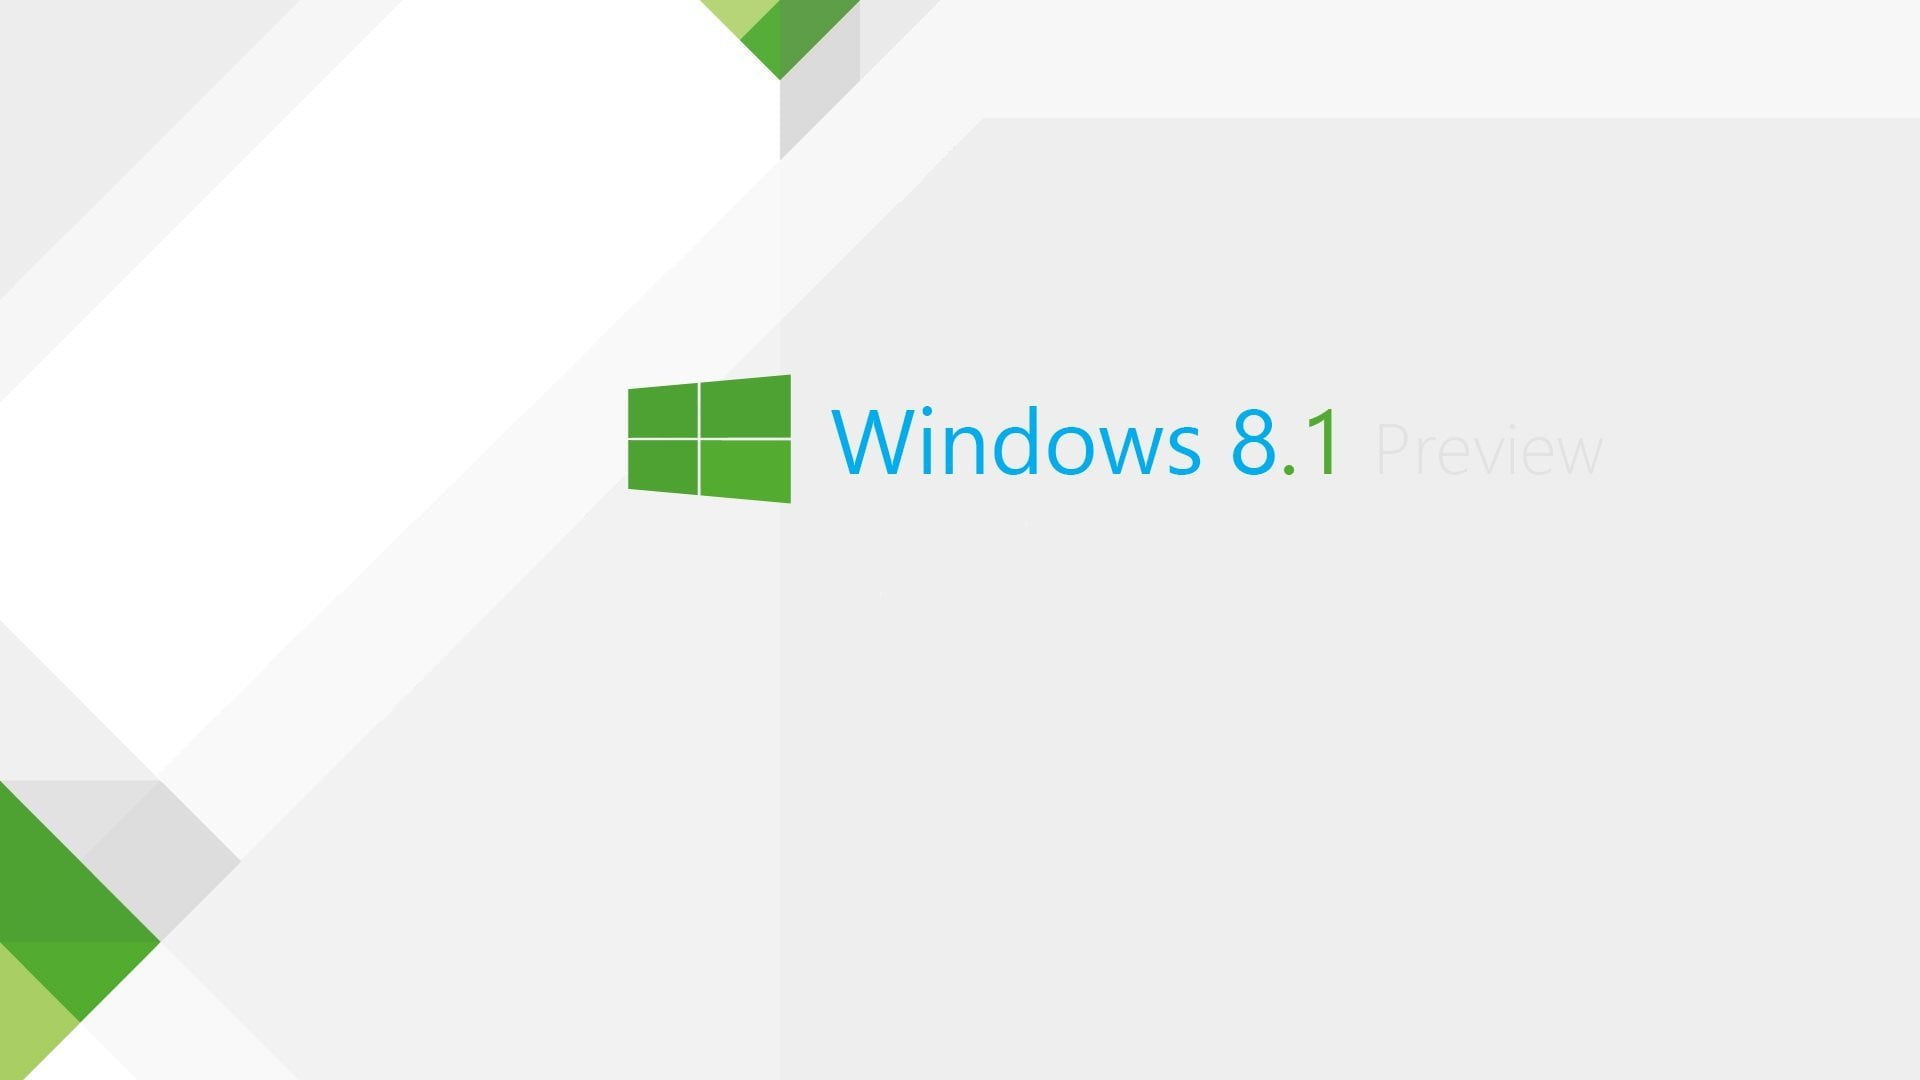 Windows 8.1 wallpaper, communication, text, symbol, copy space